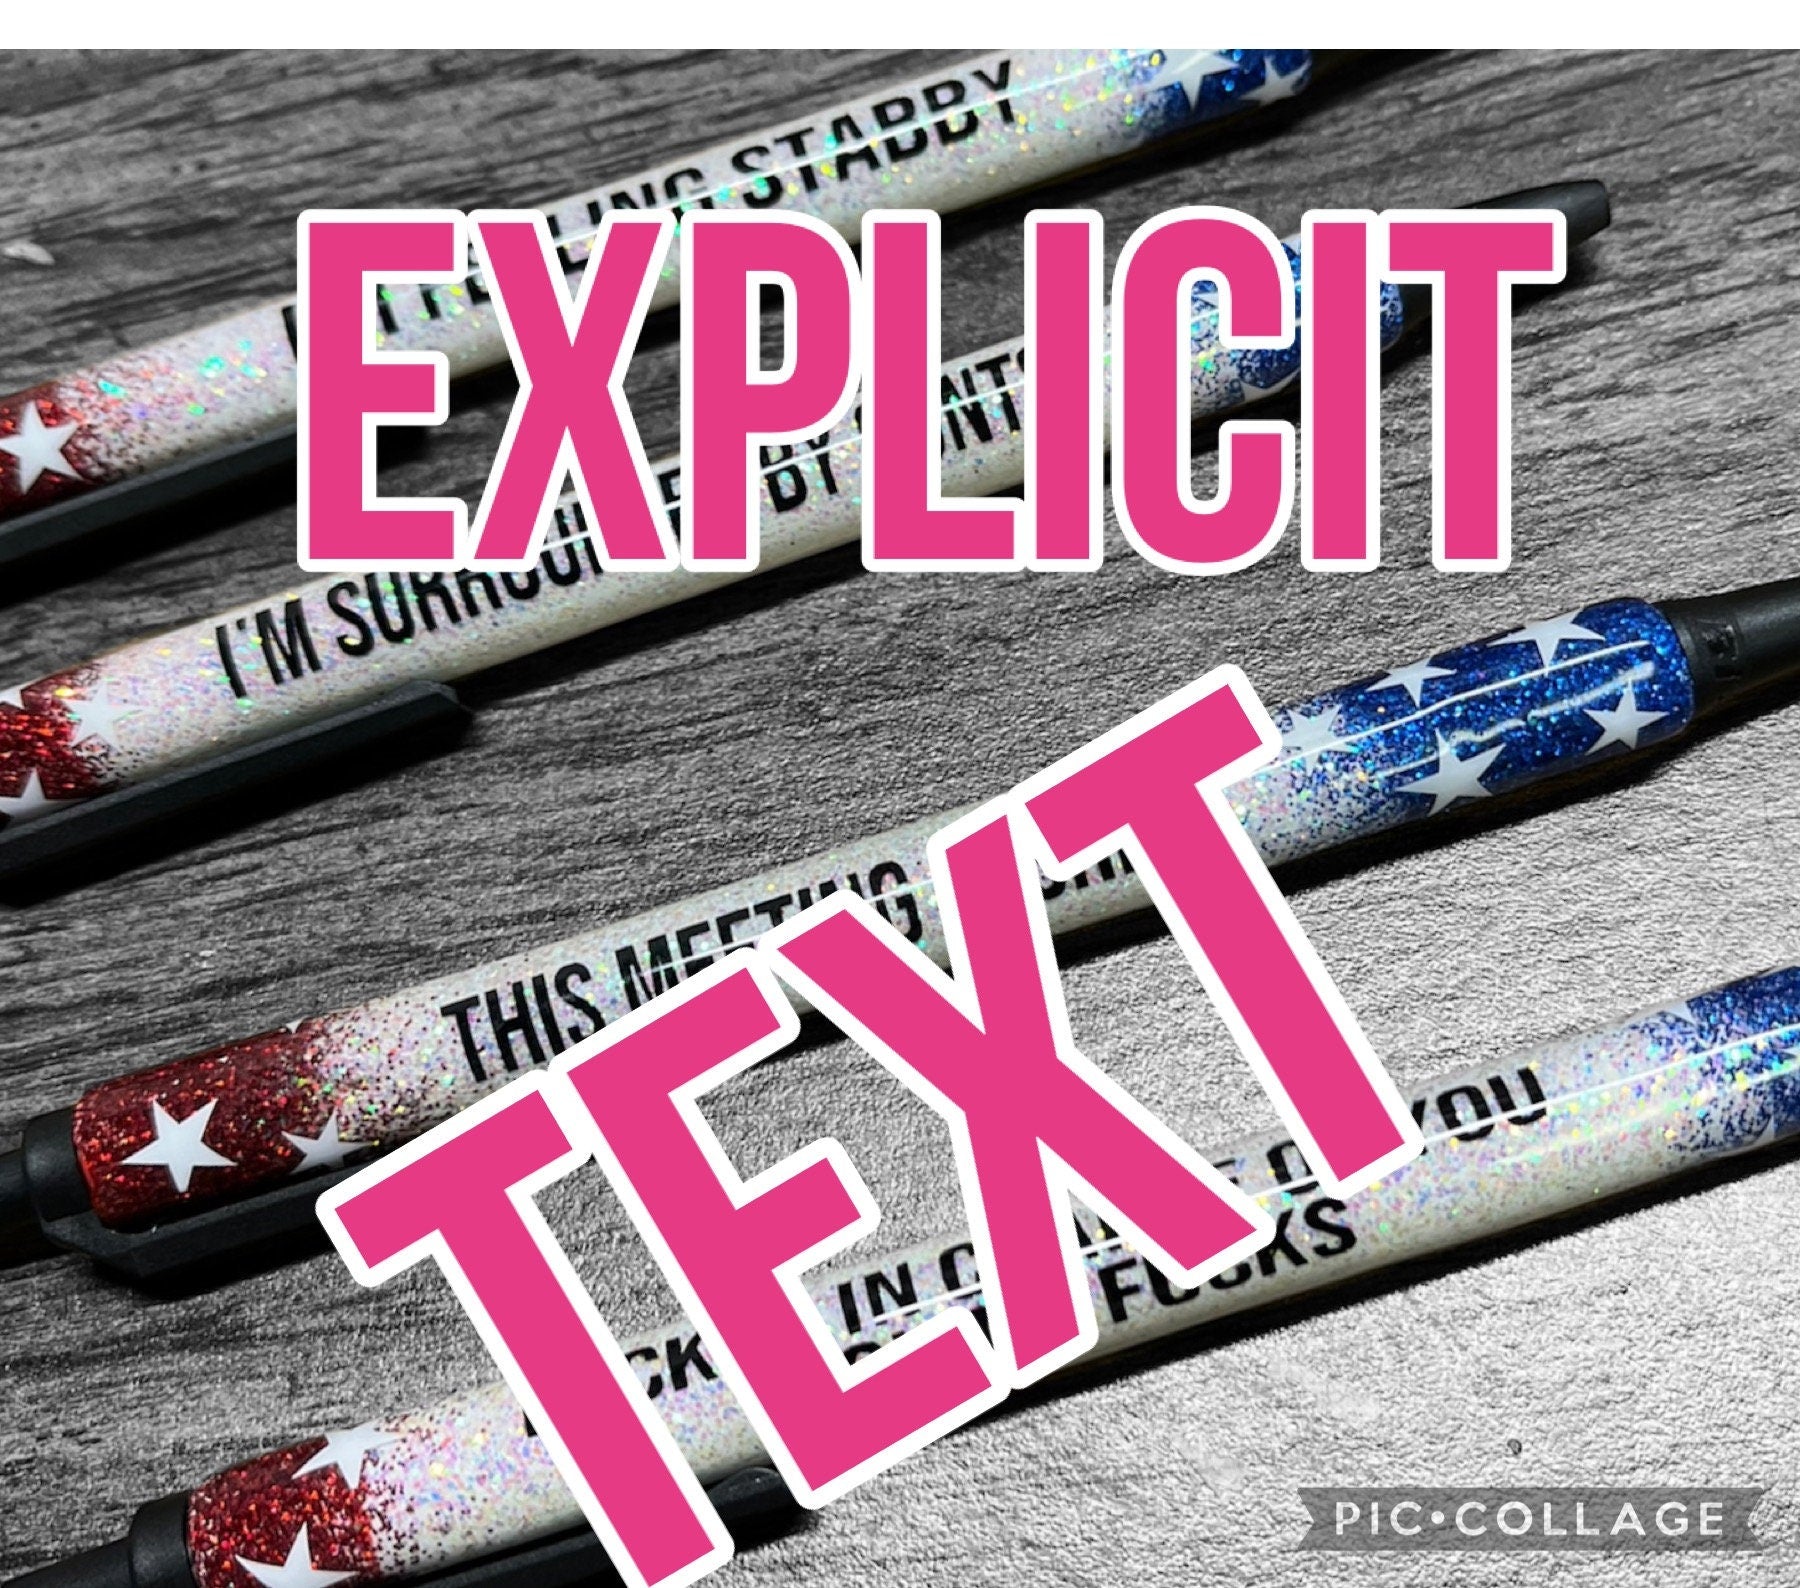 Handmade Beach Ombre Glitter Pens With Funny Sayings, Refillable Pens,  Custom Resin Pens, Funny Beach Pens, Teacher Gift 